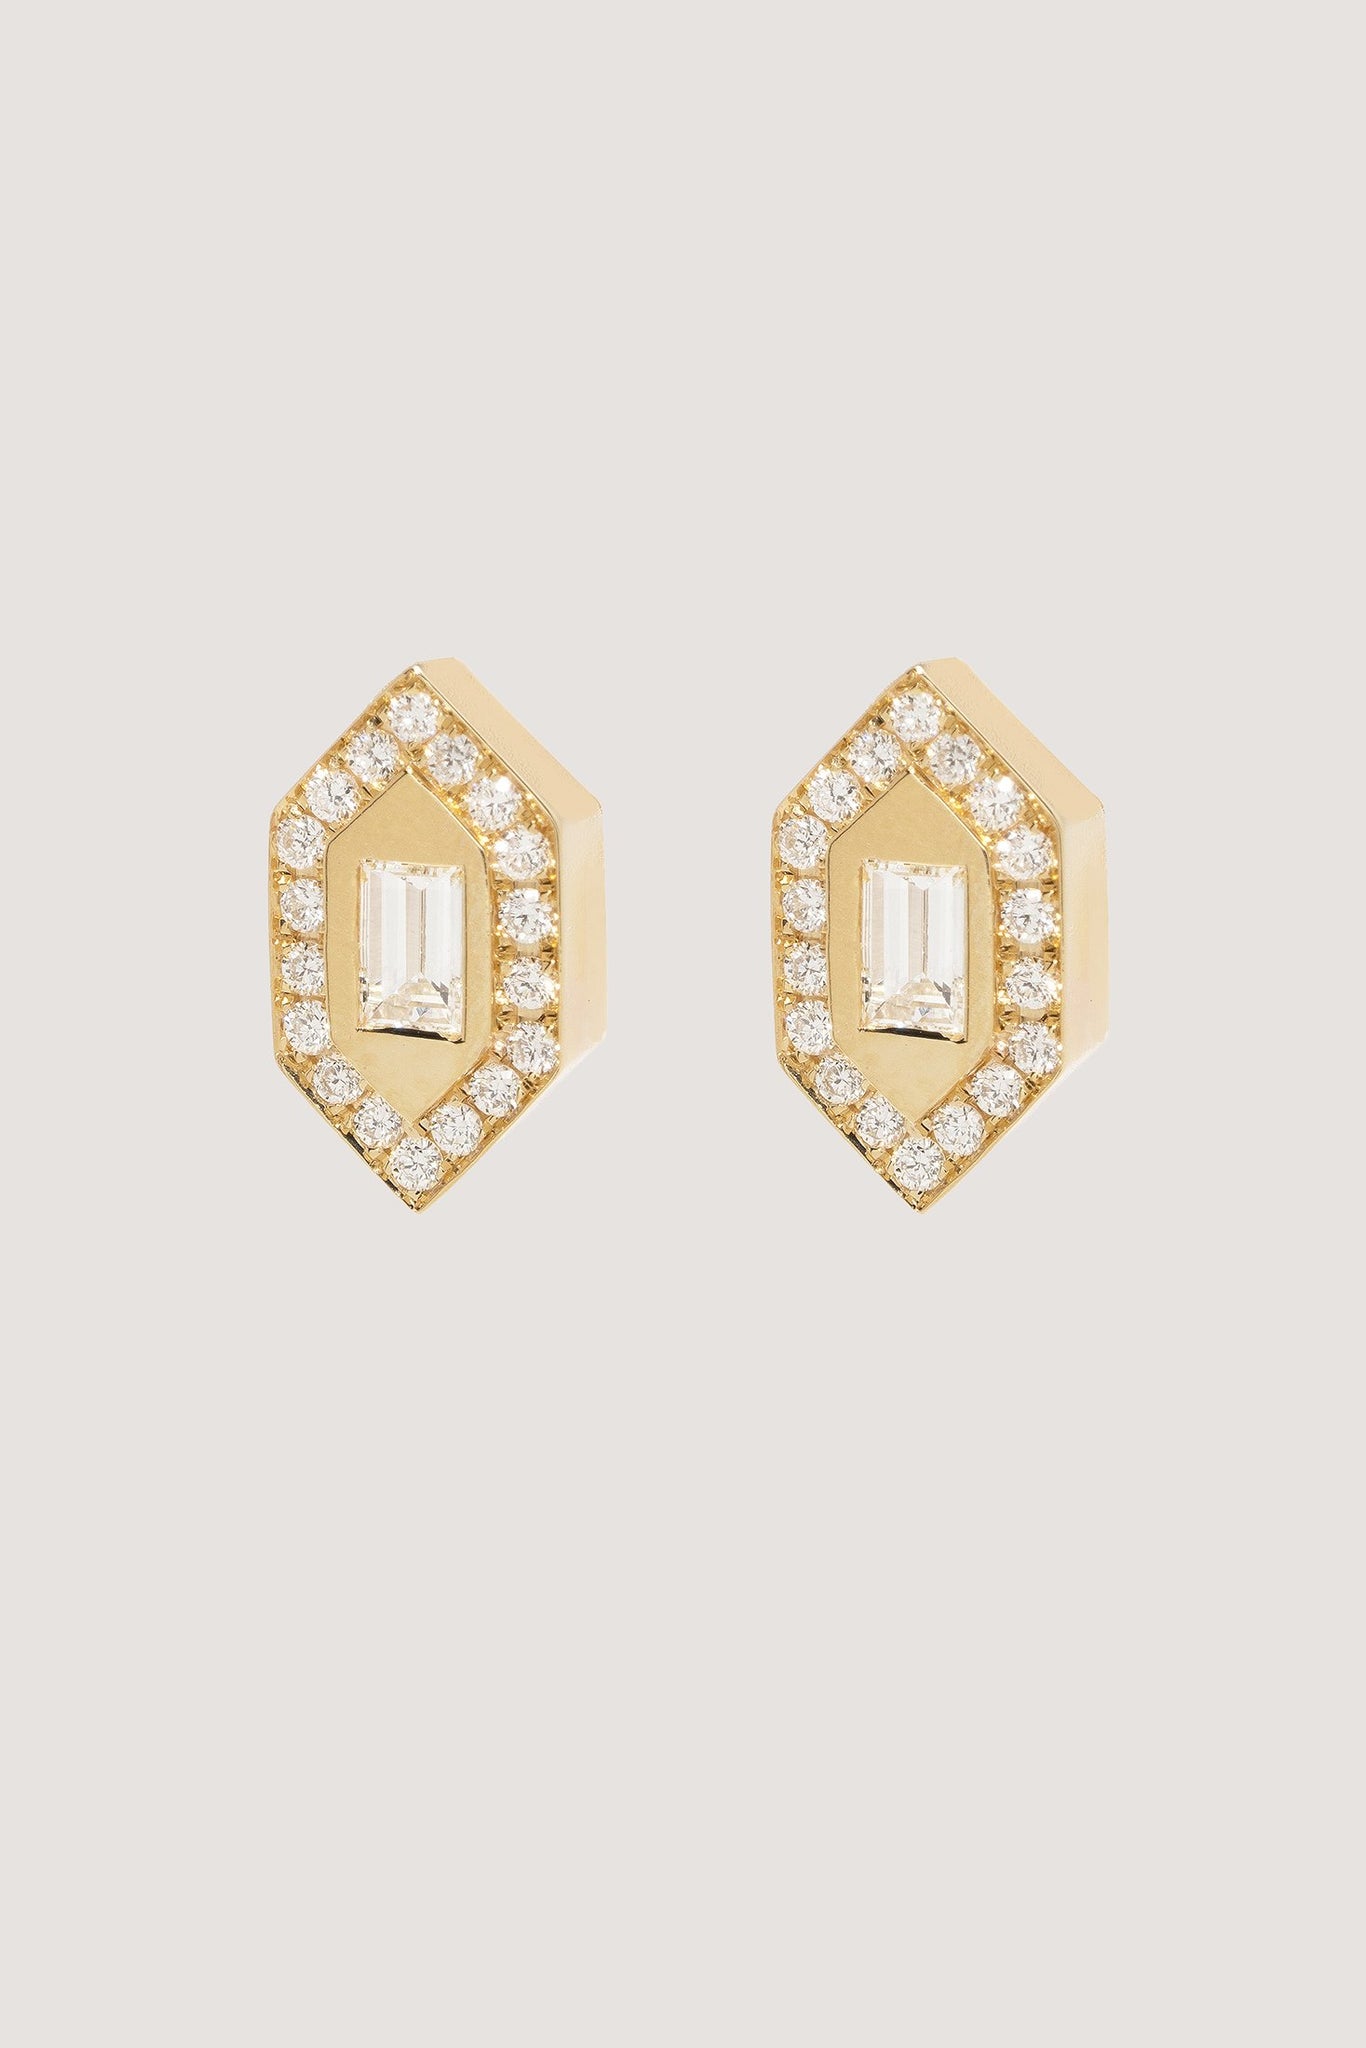 Azlee - N/S Diamond Stud Earrings, Gold